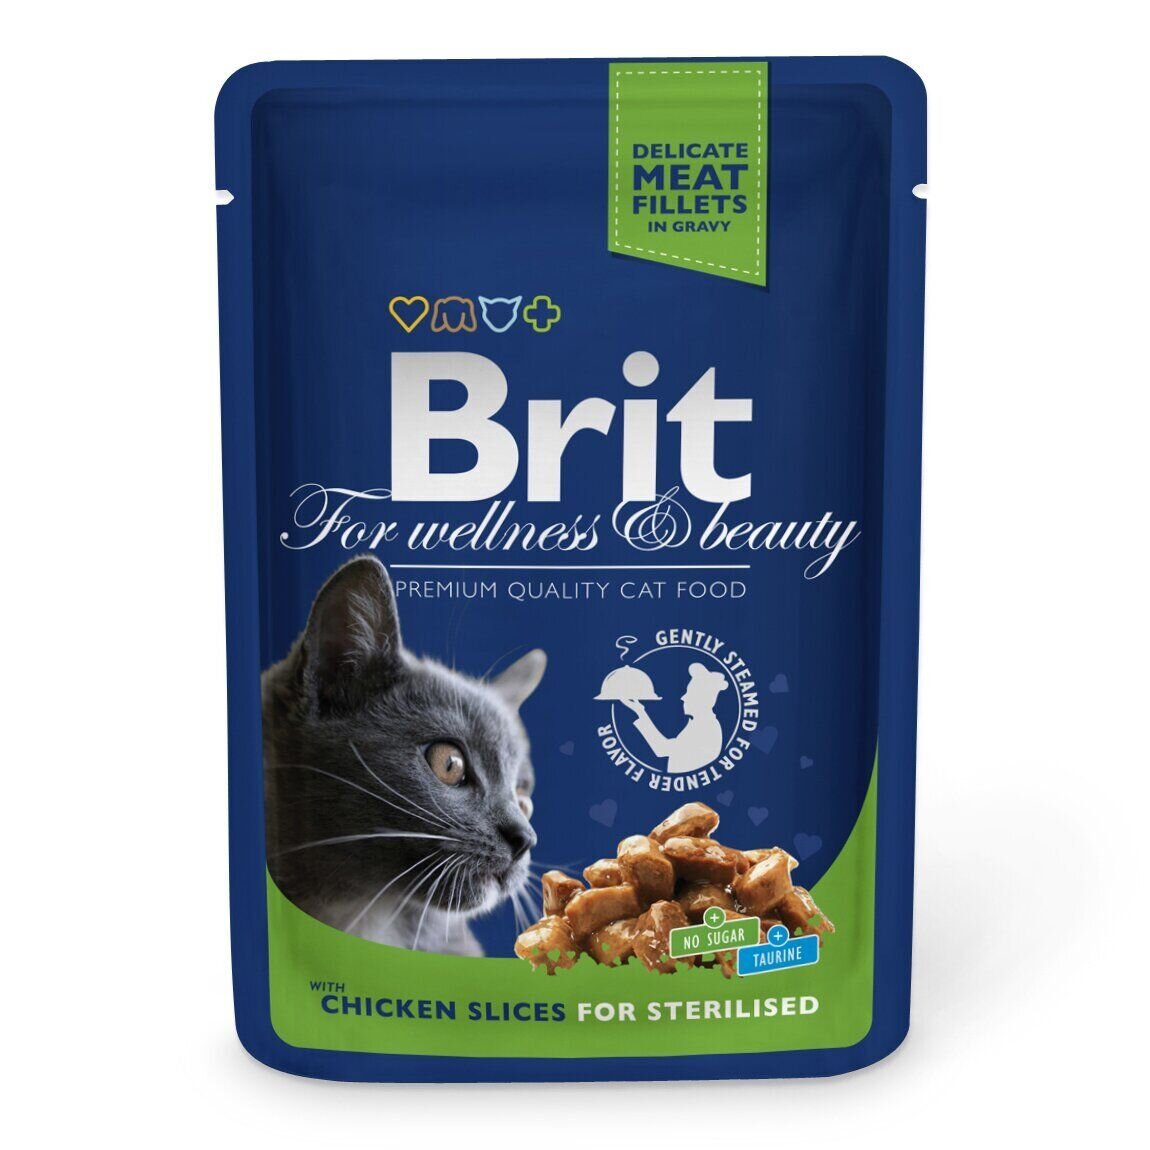 Brit Premium Cat Chicken Slices for Sterilised pouch - Влажный корм для стерилизованных кошек 100 г (кусочки курицы)